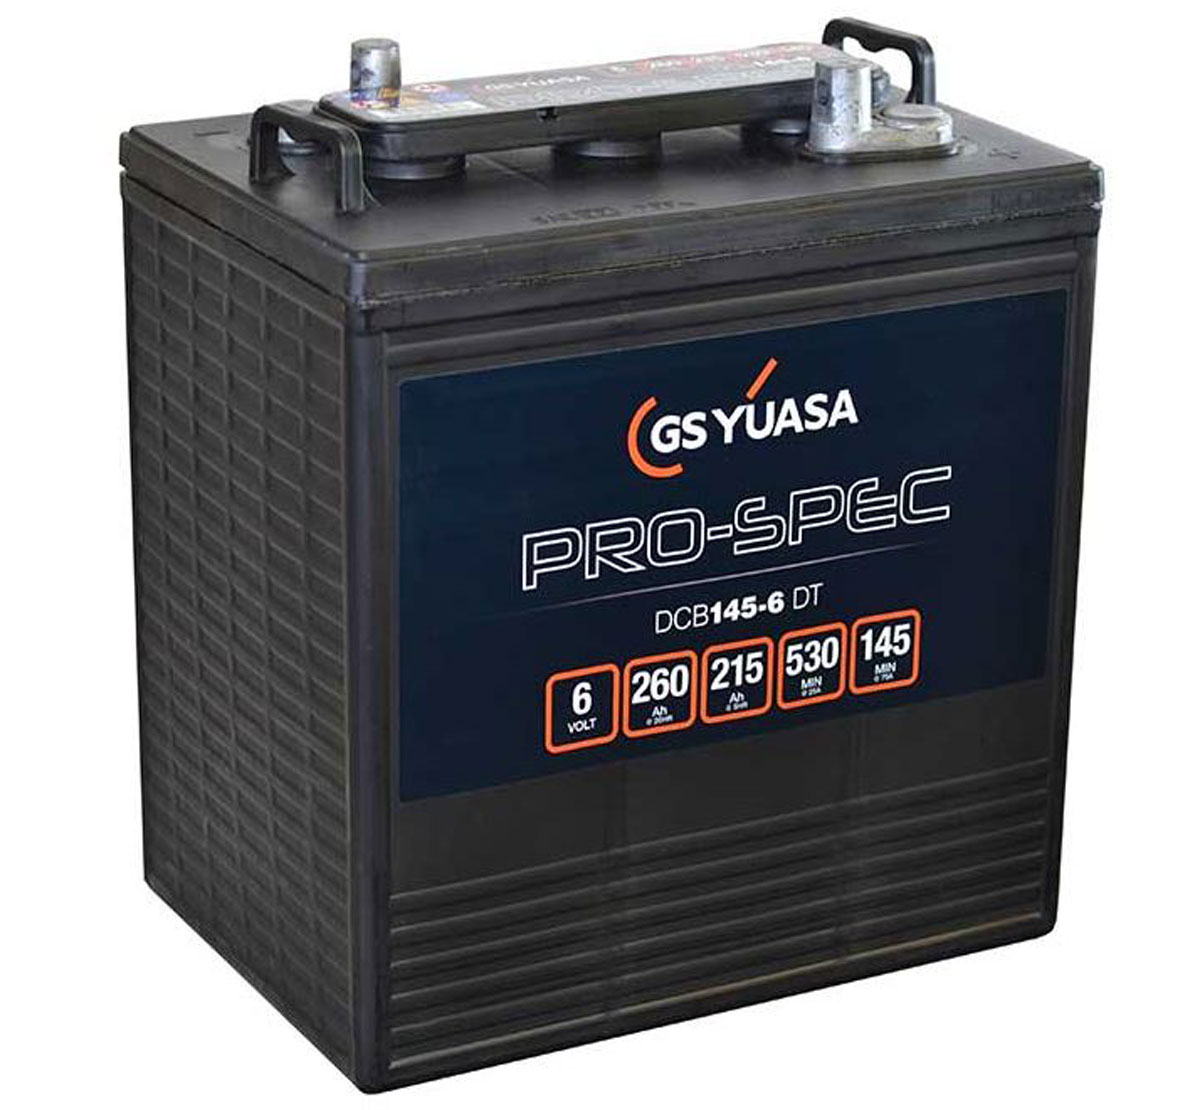 Yuasa Pro Spec DCB 145-6 6V 260Ah Battery